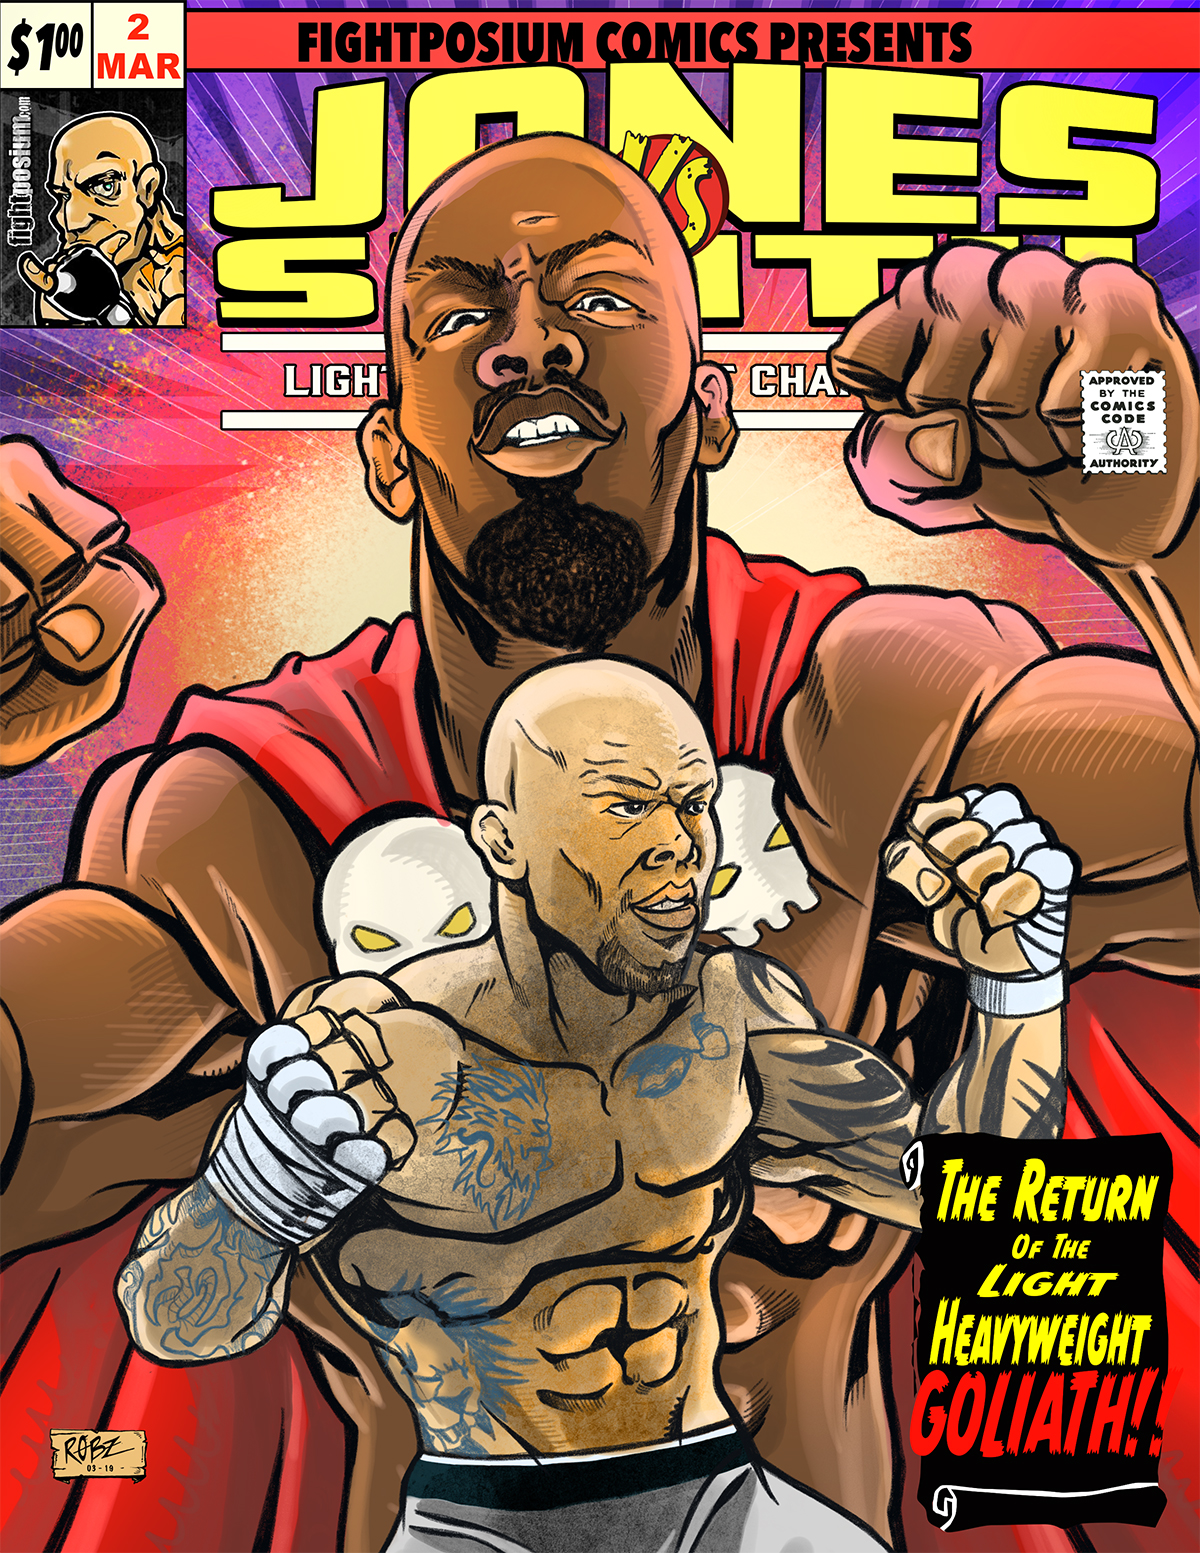 UFC 235, Jones vs Smith - The return of the Light Heavyweight Goliath!